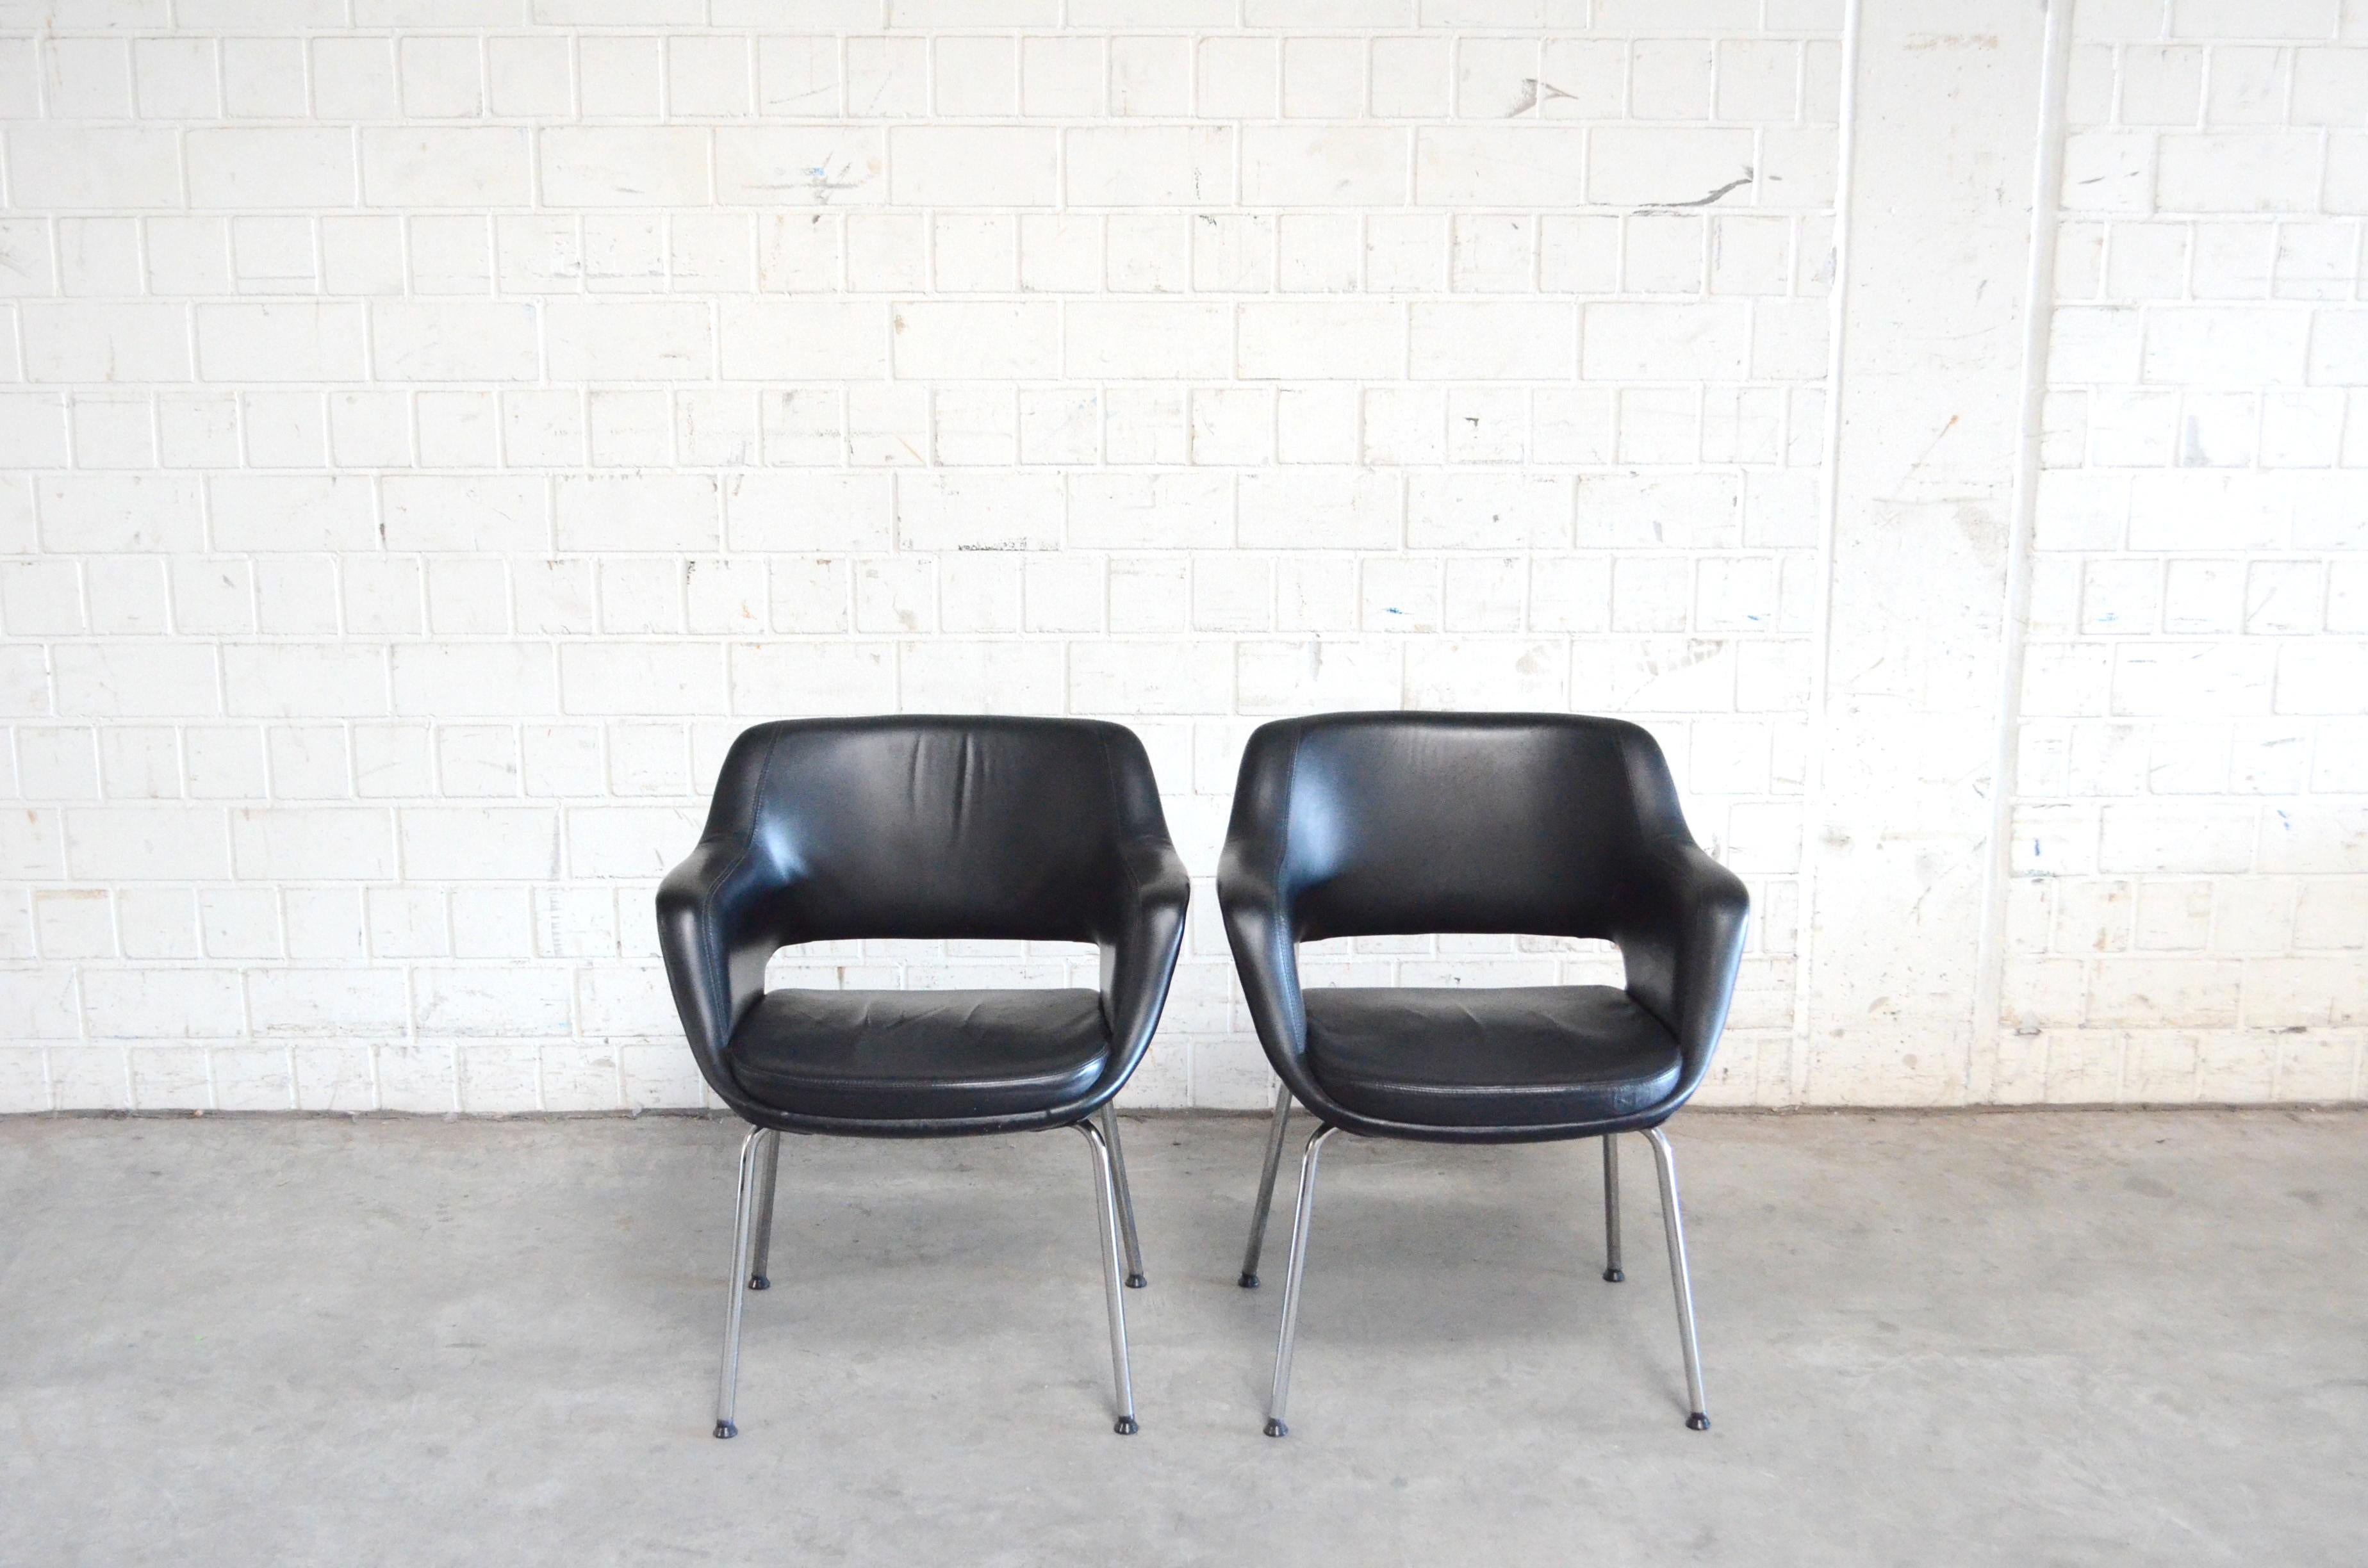 Mid-Century Modern Olli Mannermaa Pair of Leather Kilta Chair by Eugen Schmidt & Cassina Martela For Sale